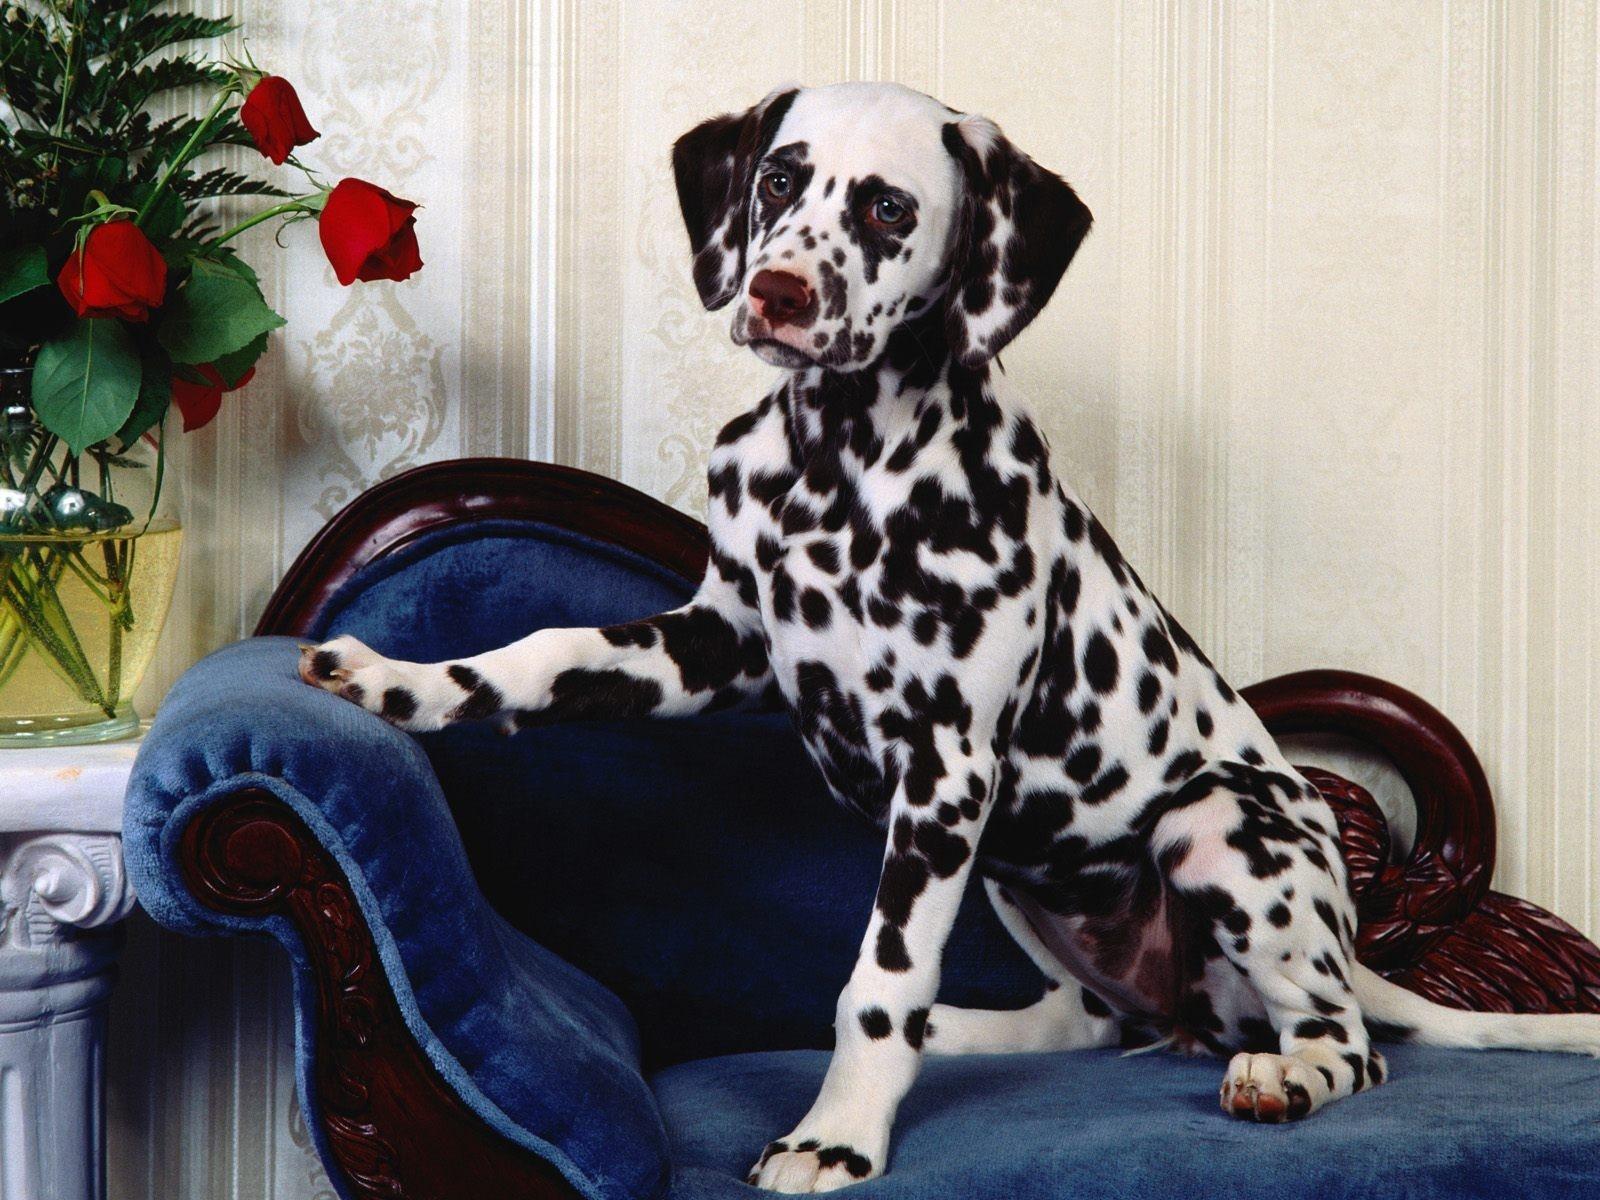 Dalmatian at 1024 x 1024 iPad size wallpapers HD quality